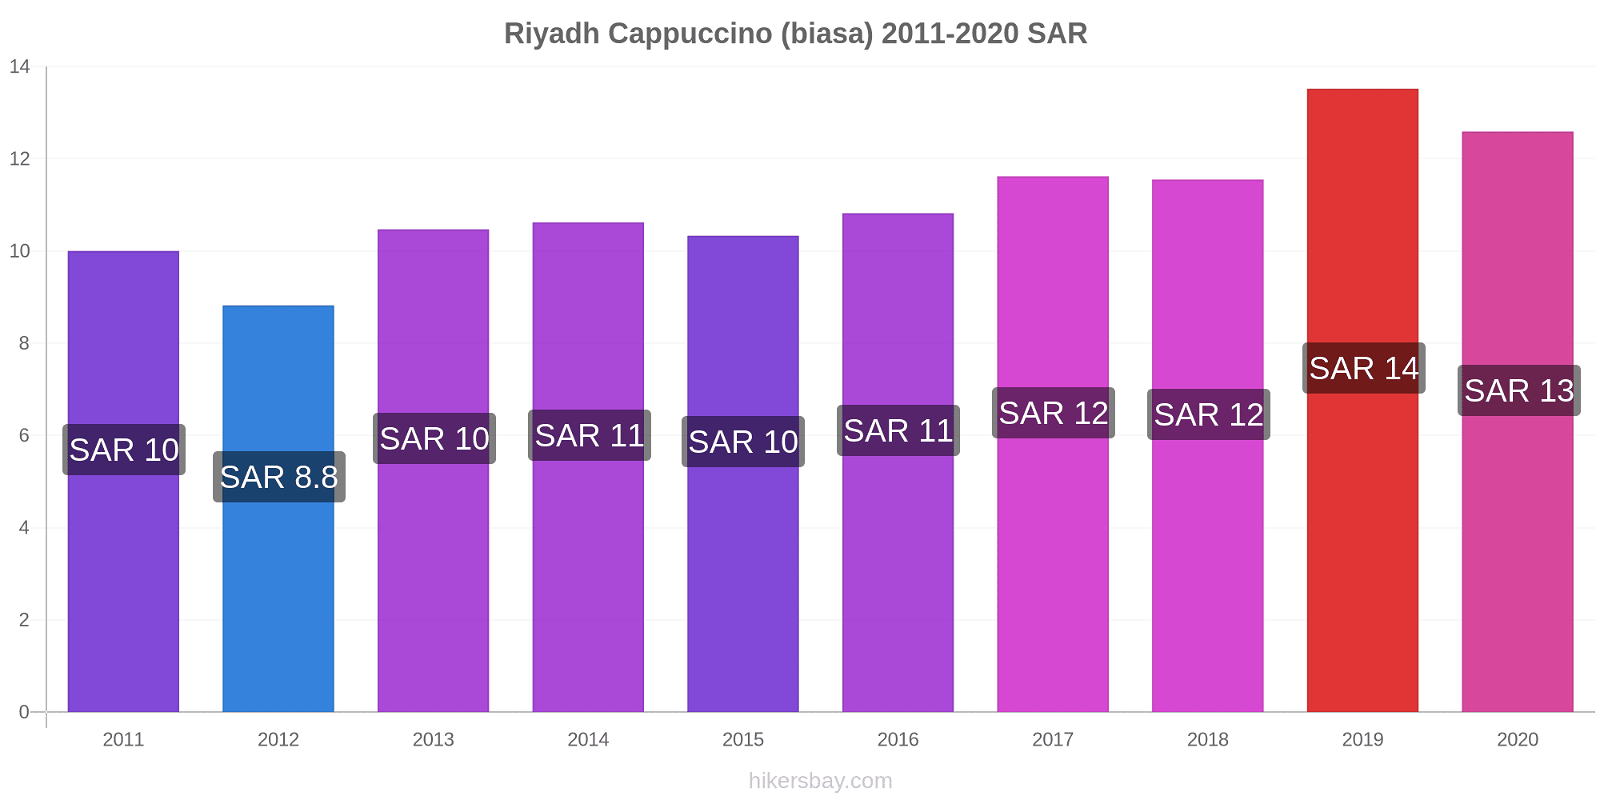 Riyadh perubahan harga Cappuccino (biasa) hikersbay.com